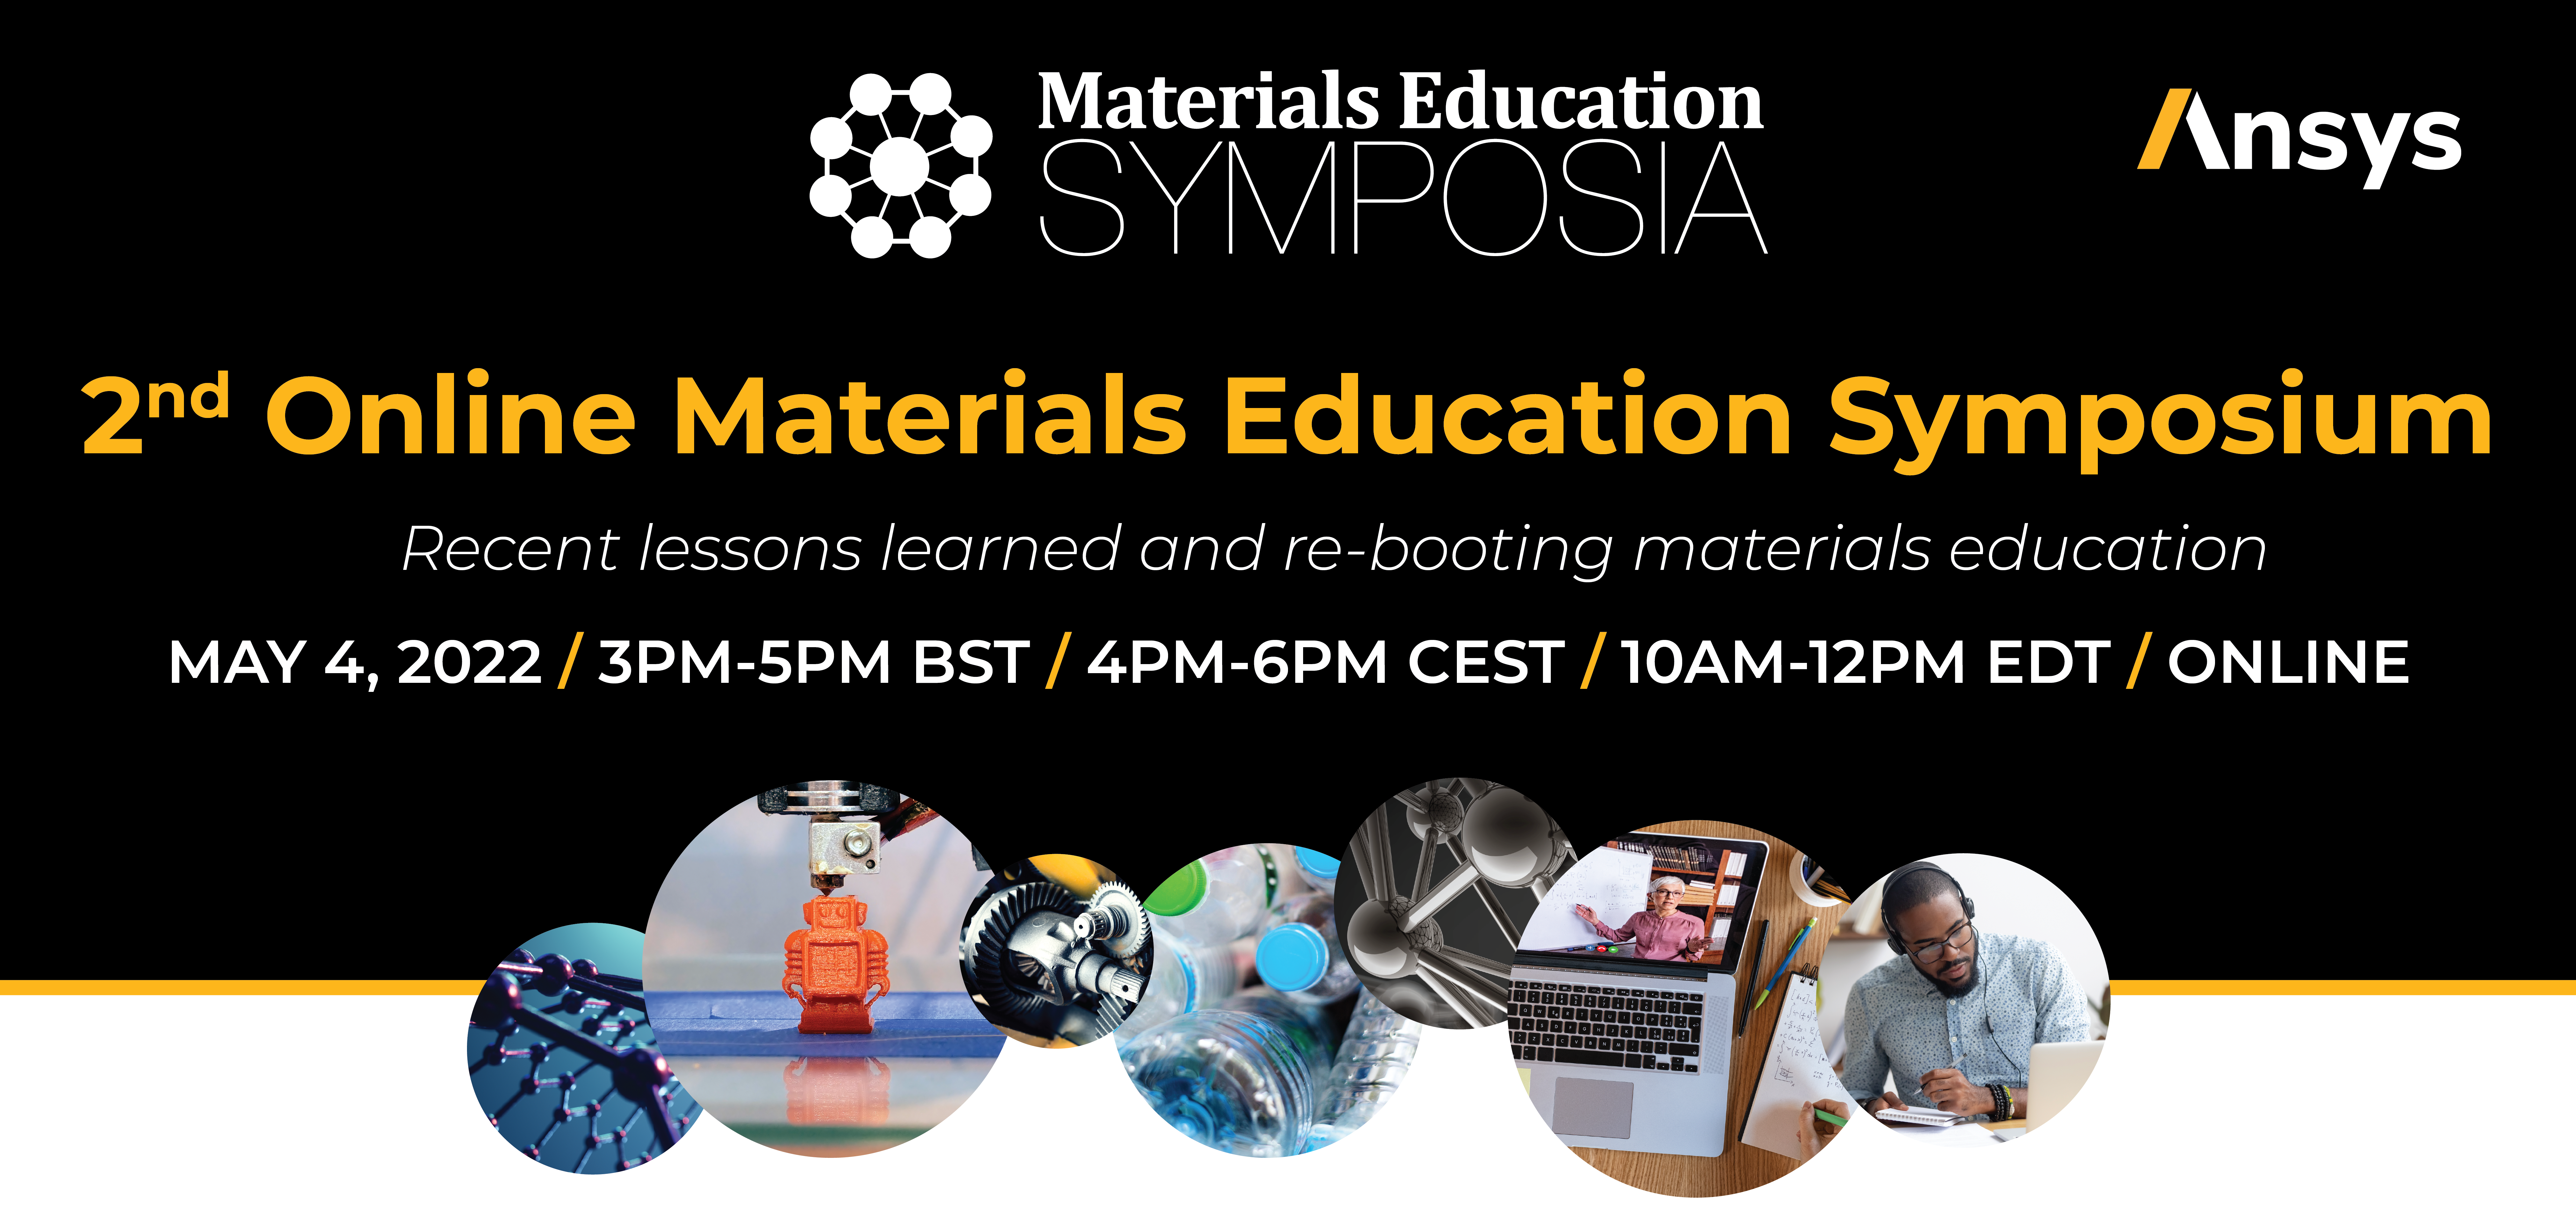 Materials Education Symposia